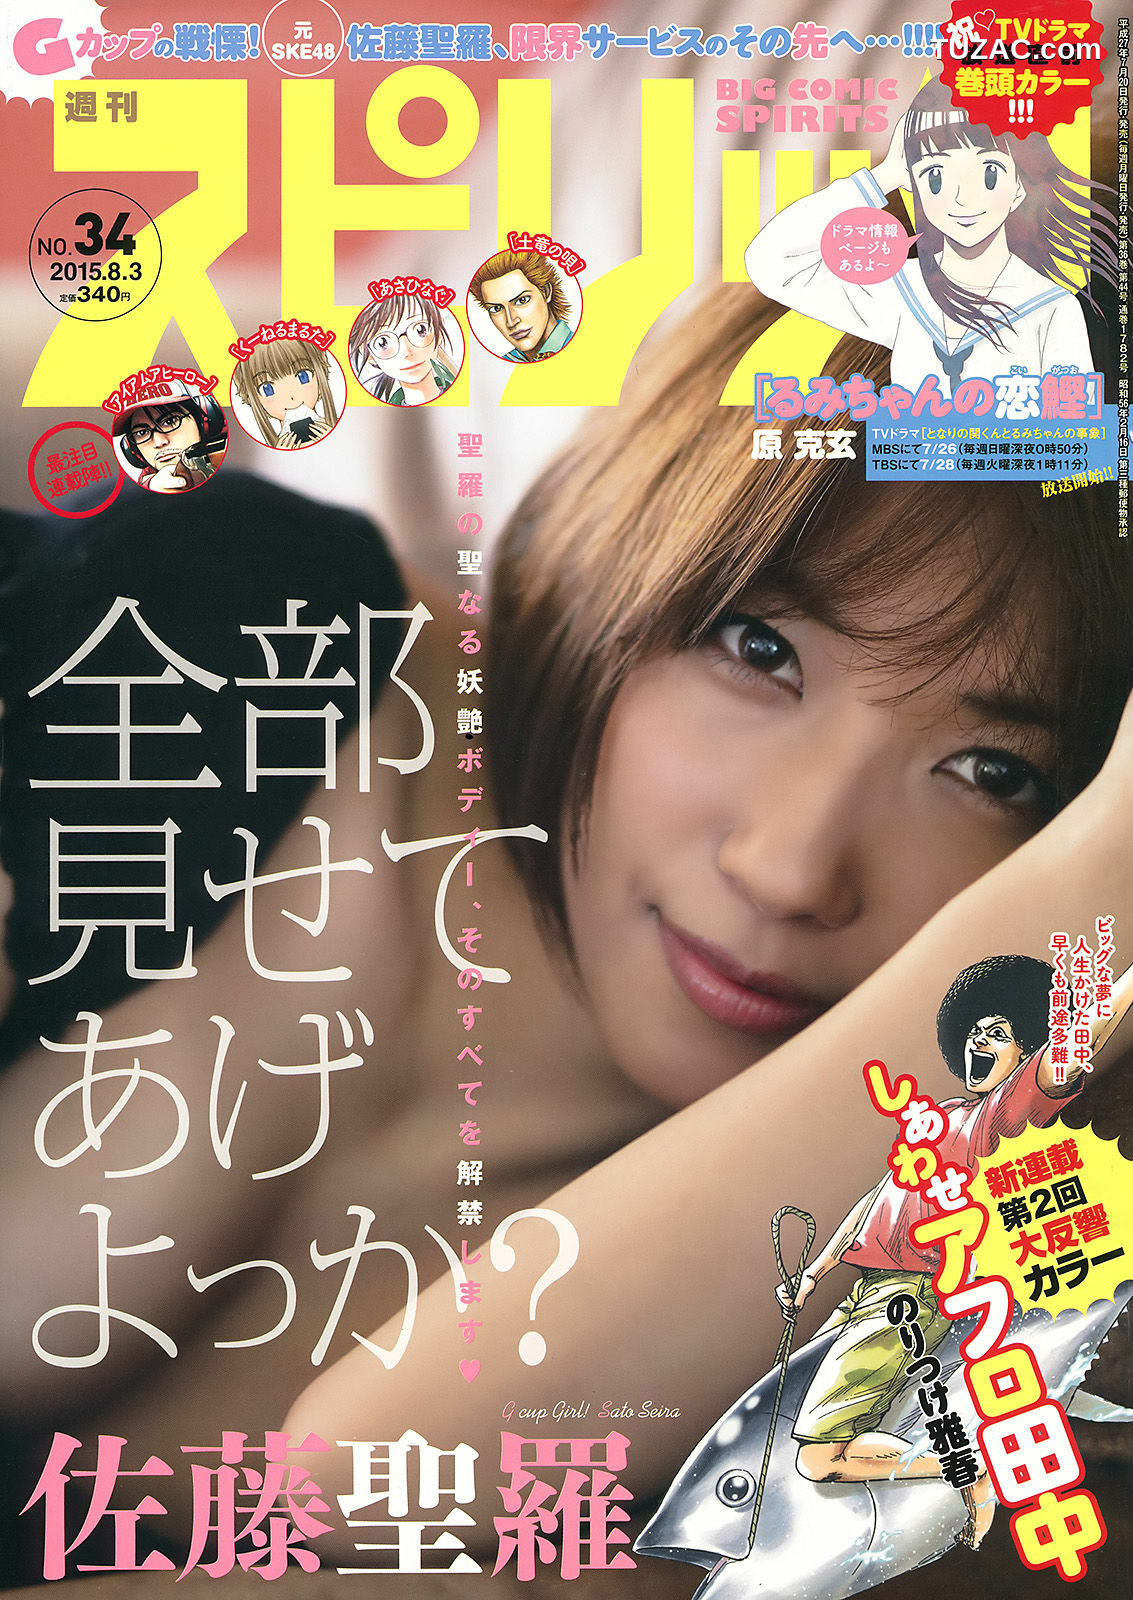 Weekly Big Comic Spirits杂志写真_ 佐藤聖羅 2015年No.34 写真杂志[11P]